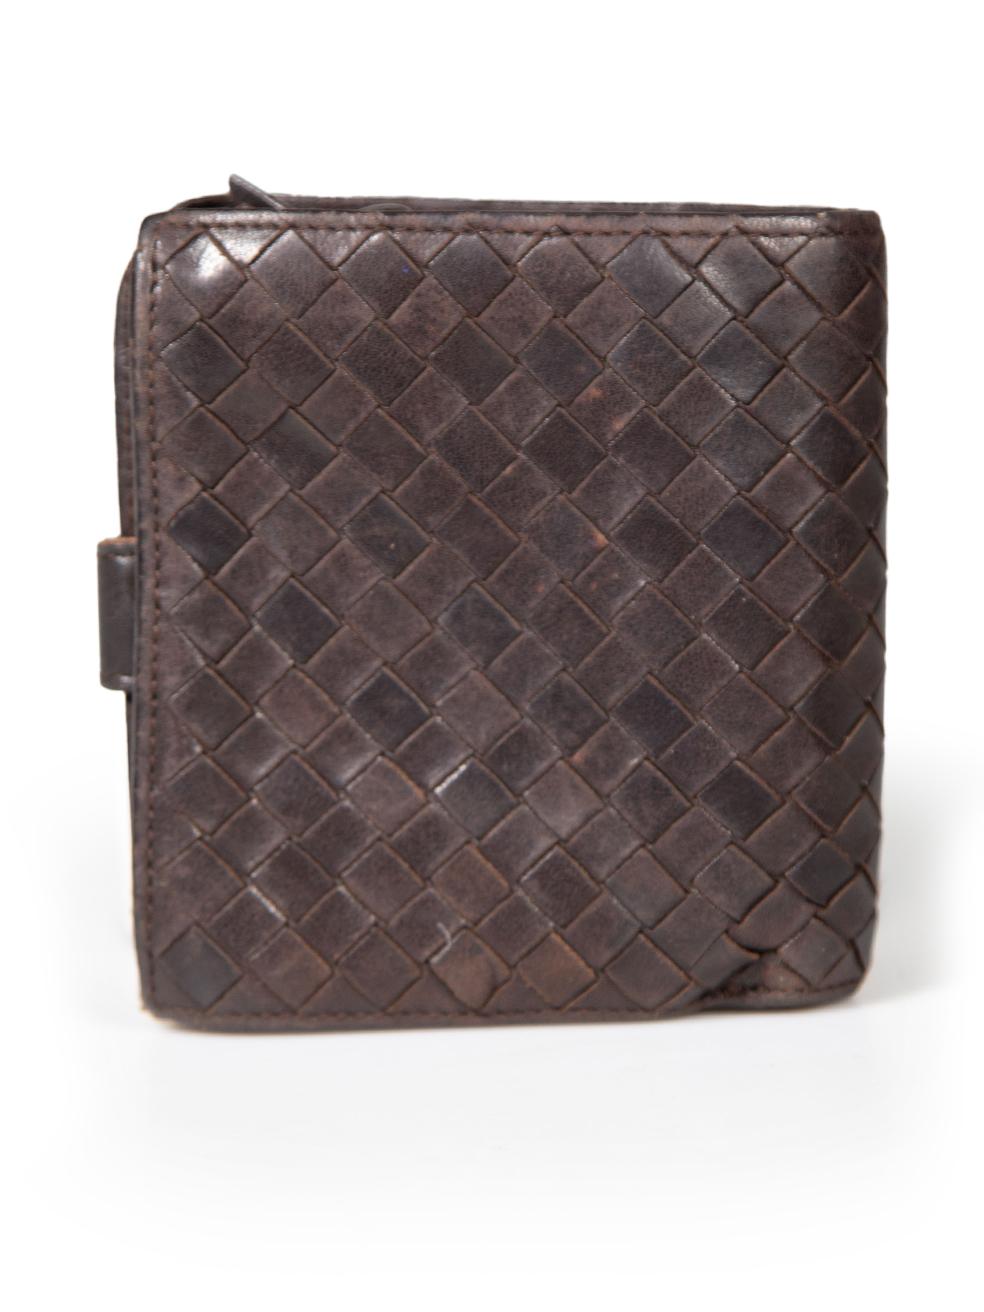 Bottega Veneta Brown Leather Intrecciato Wallet In Good Condition For Sale In London, GB